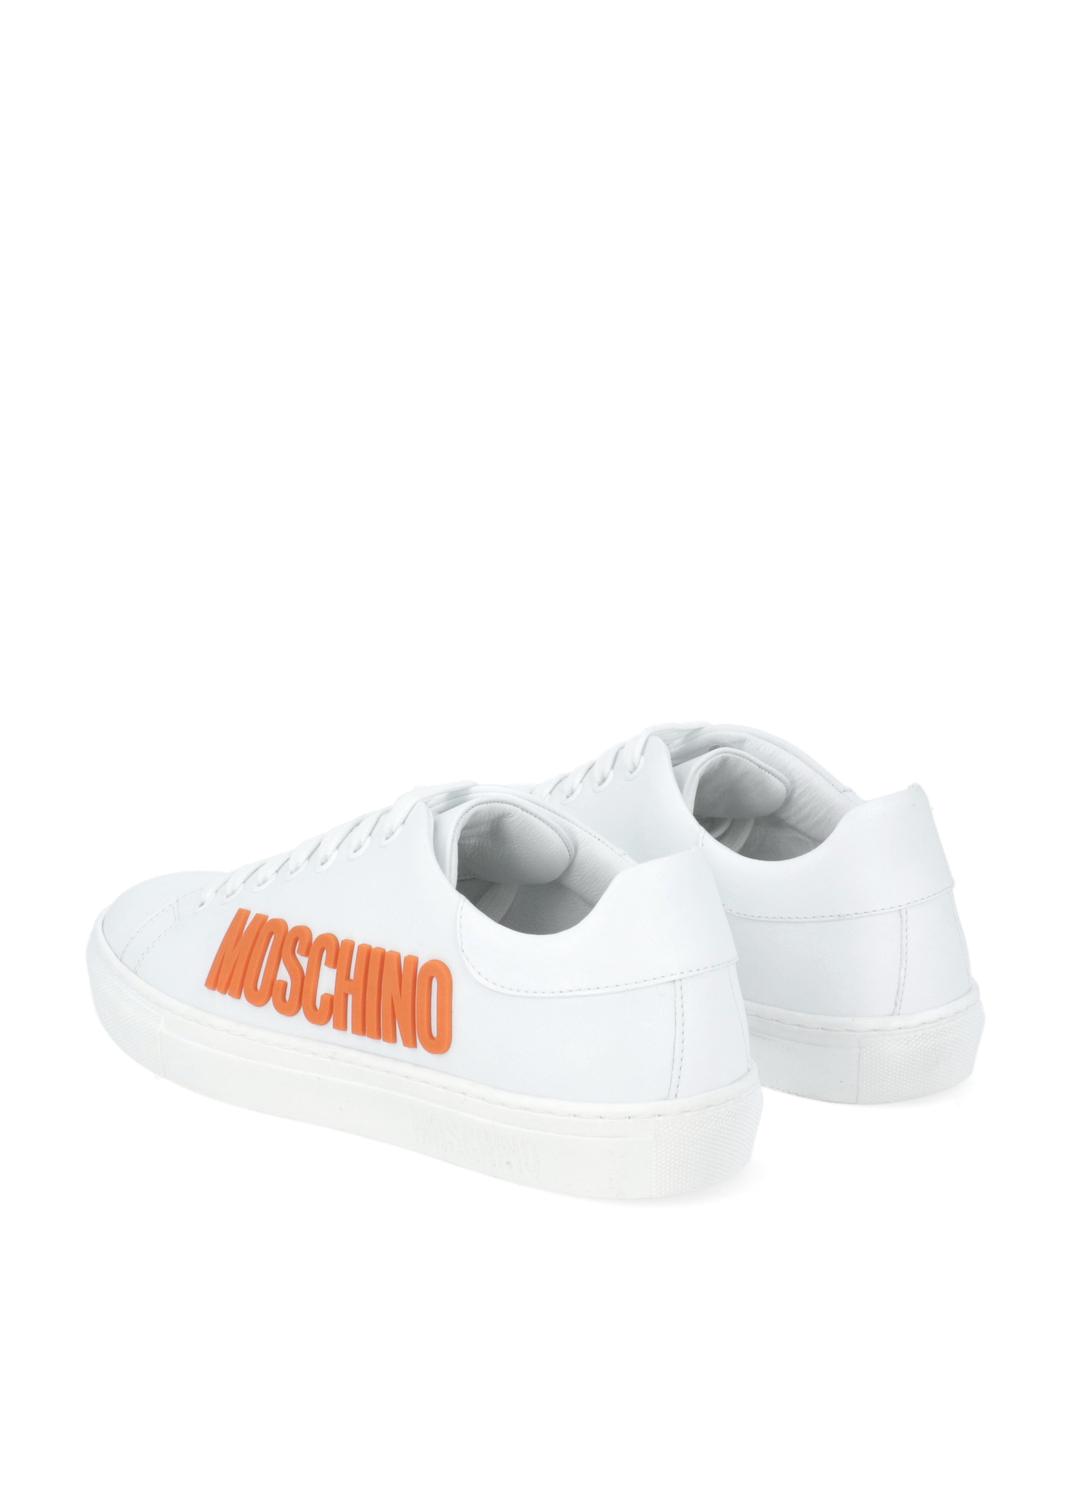 Moschino tenis sneakers bajos con logo MSC-MB15862